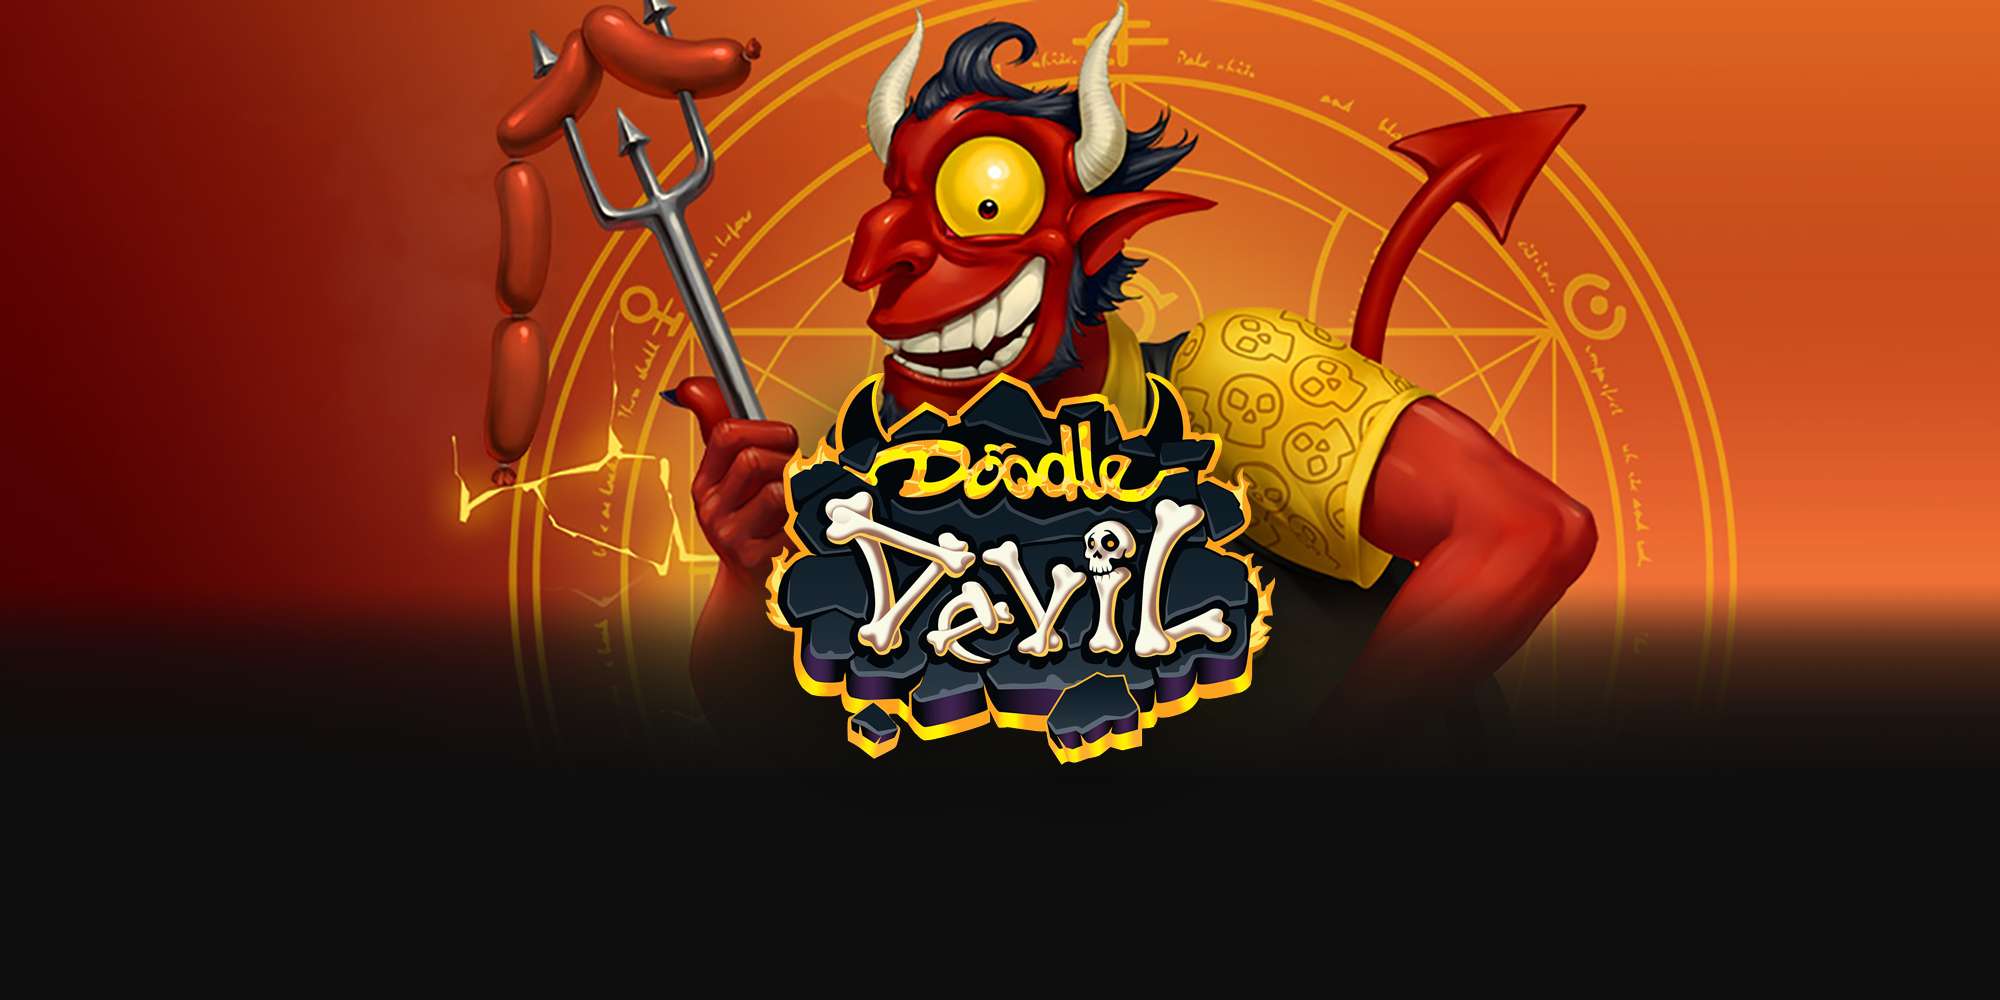 doodle devil demons